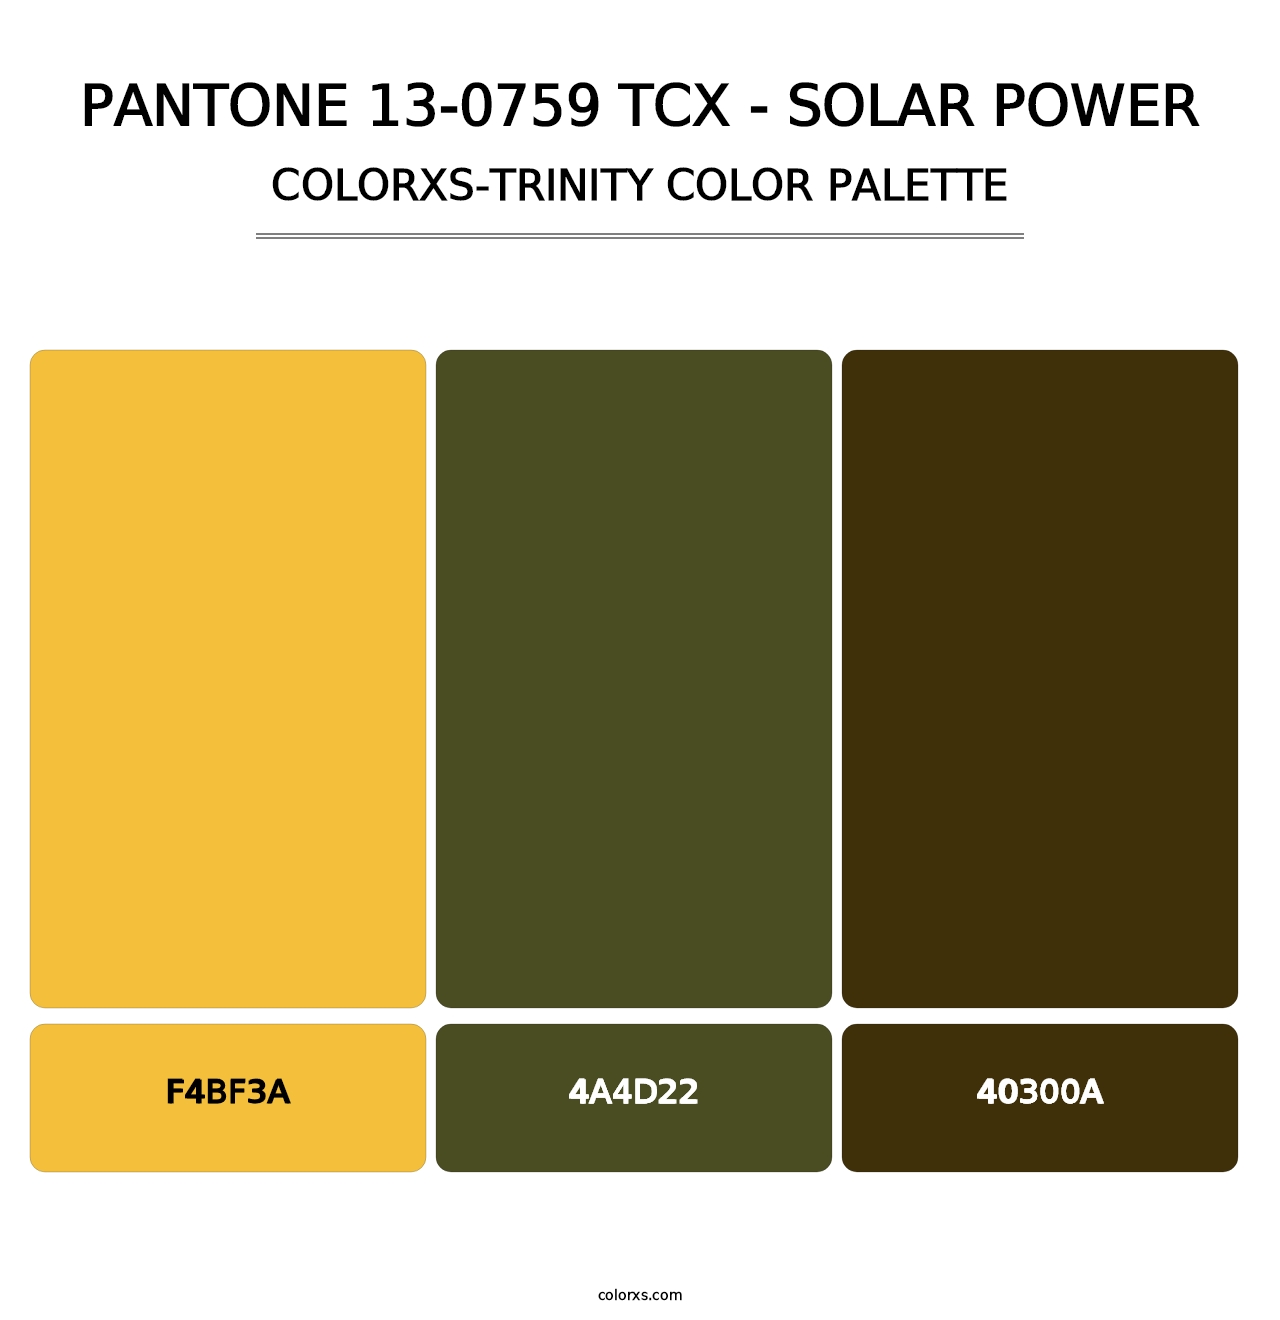 PANTONE 13-0759 TCX - Solar Power - Colorxs Trinity Palette